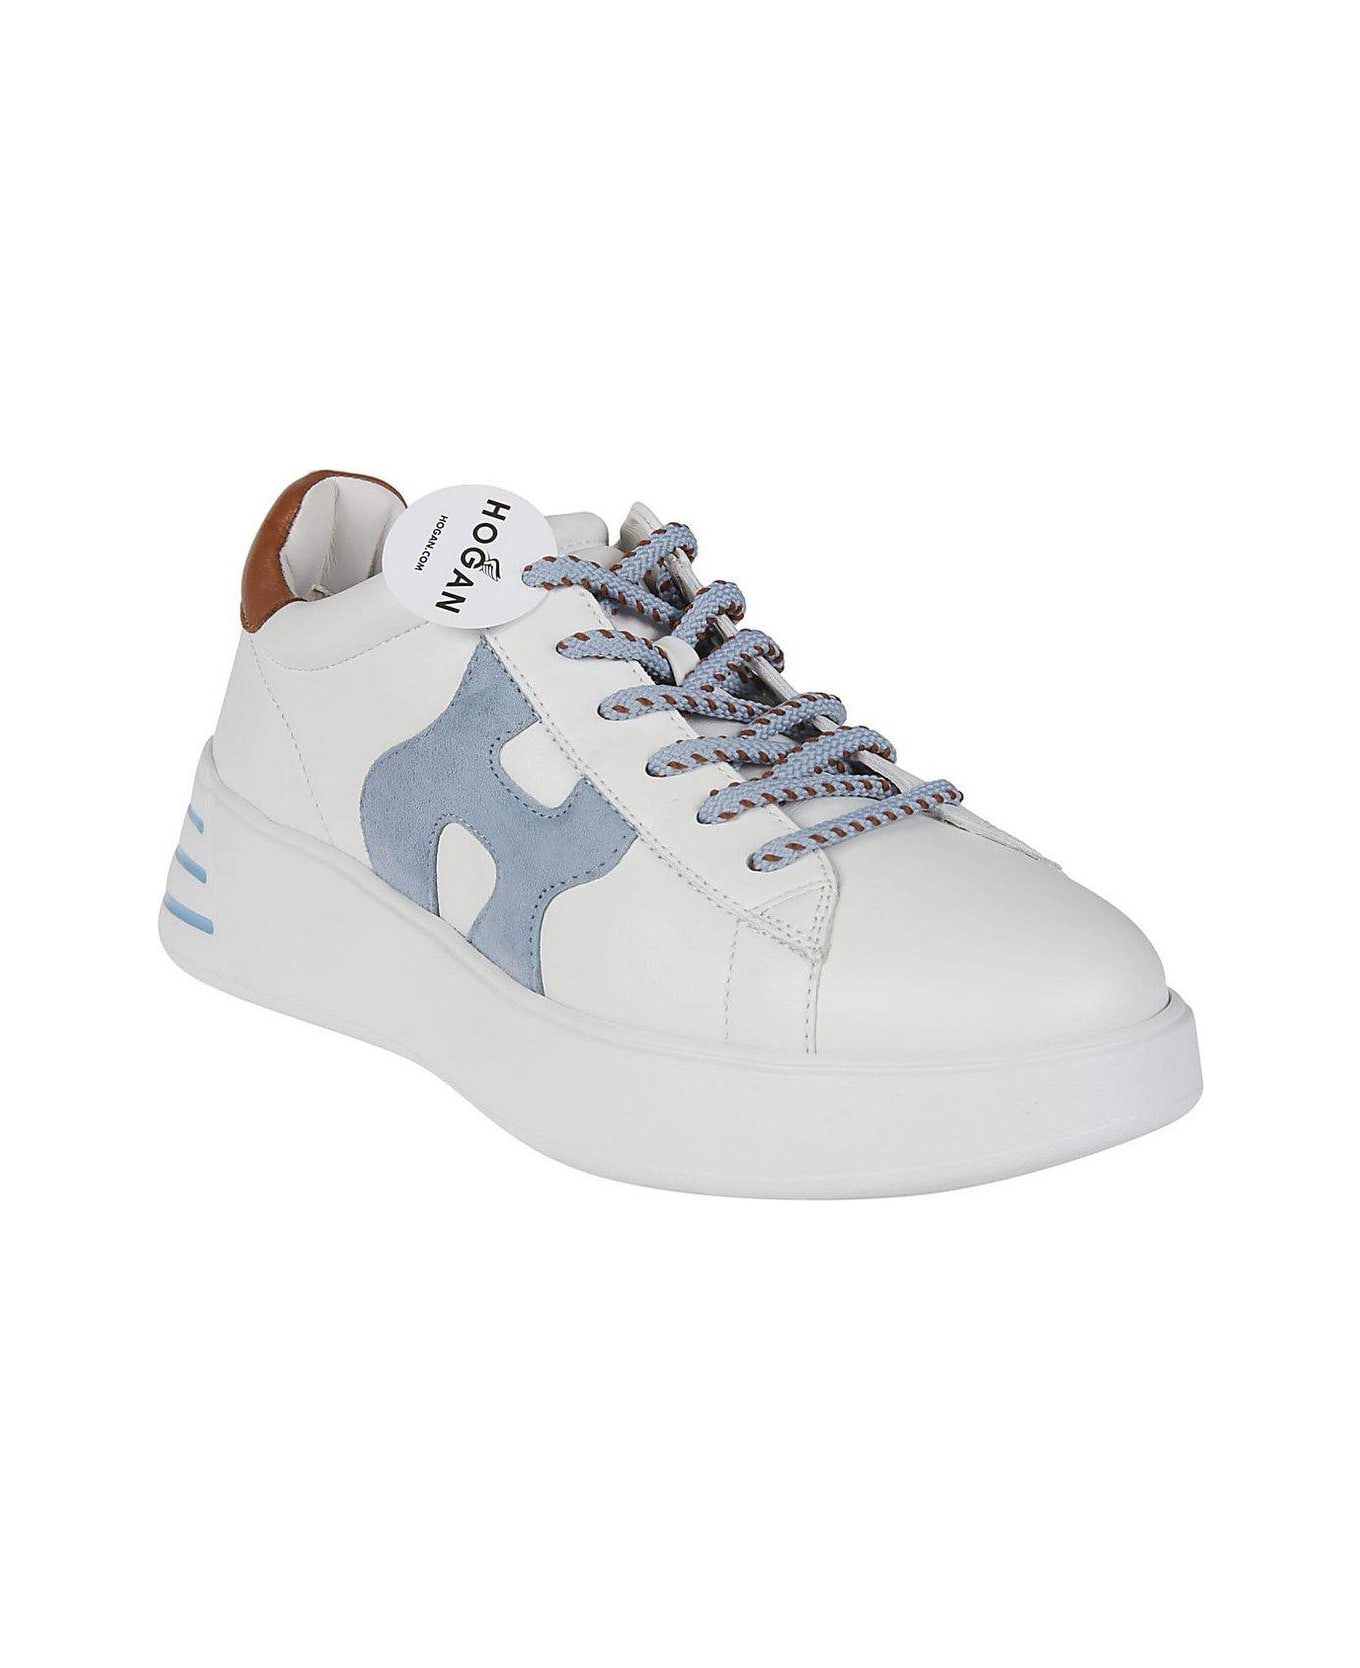 Hogan Rebel H564 Sneakers - Bianco/cuoio Scuro